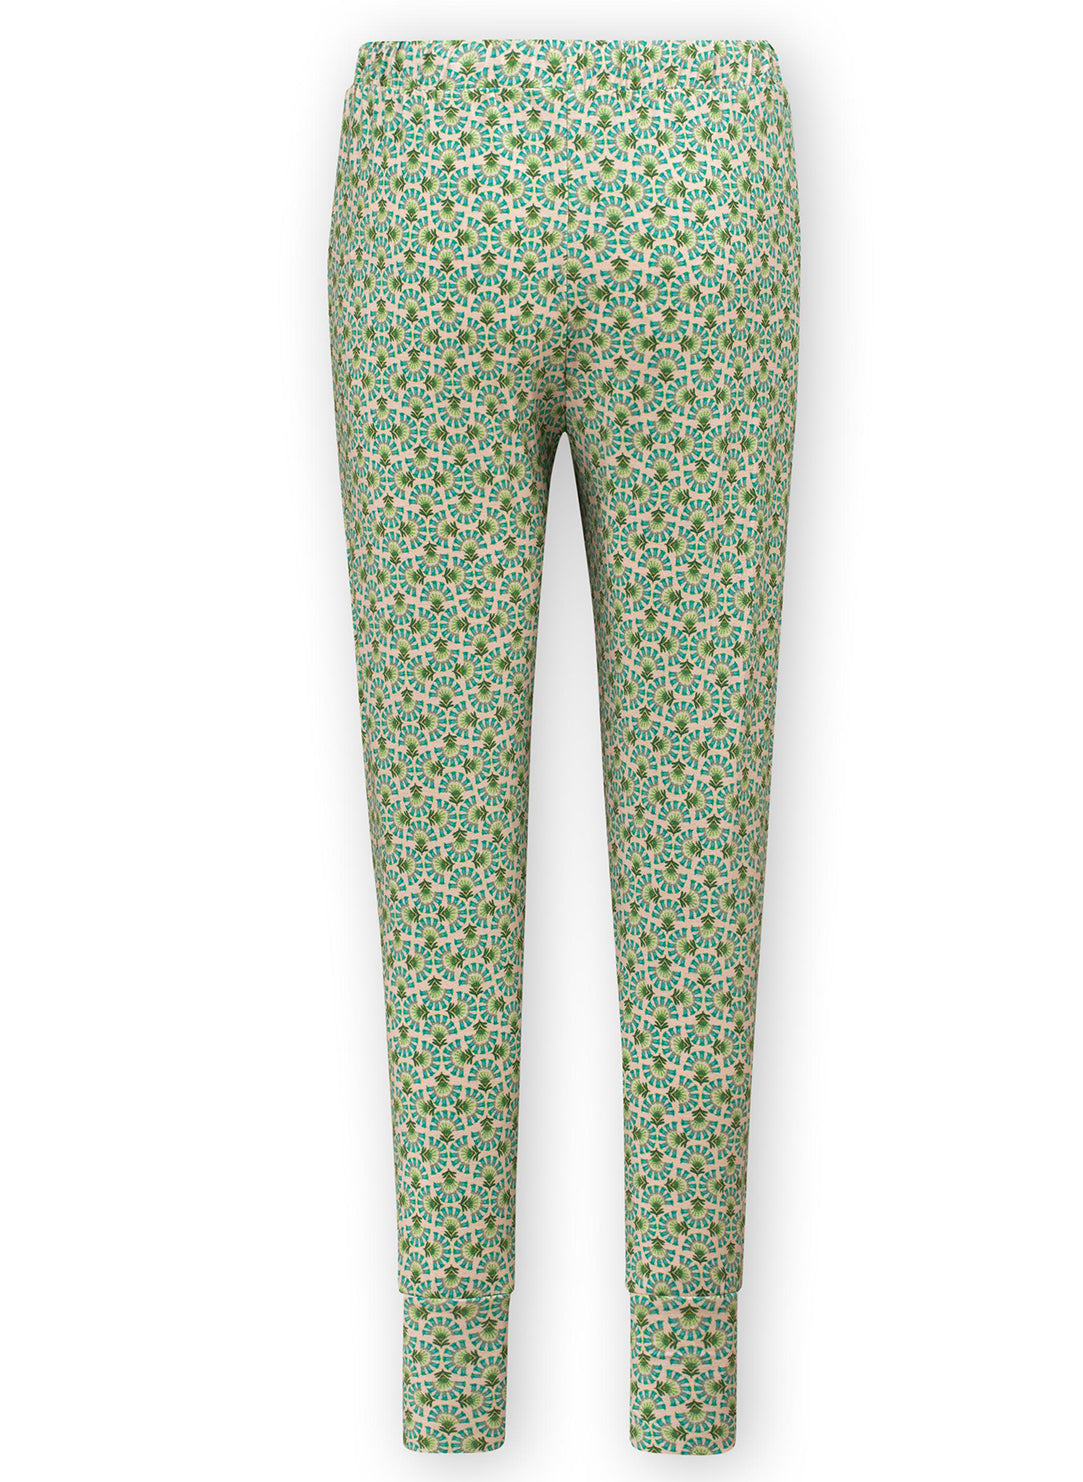 Verano Green Bobien Cuffed Pajama Pant